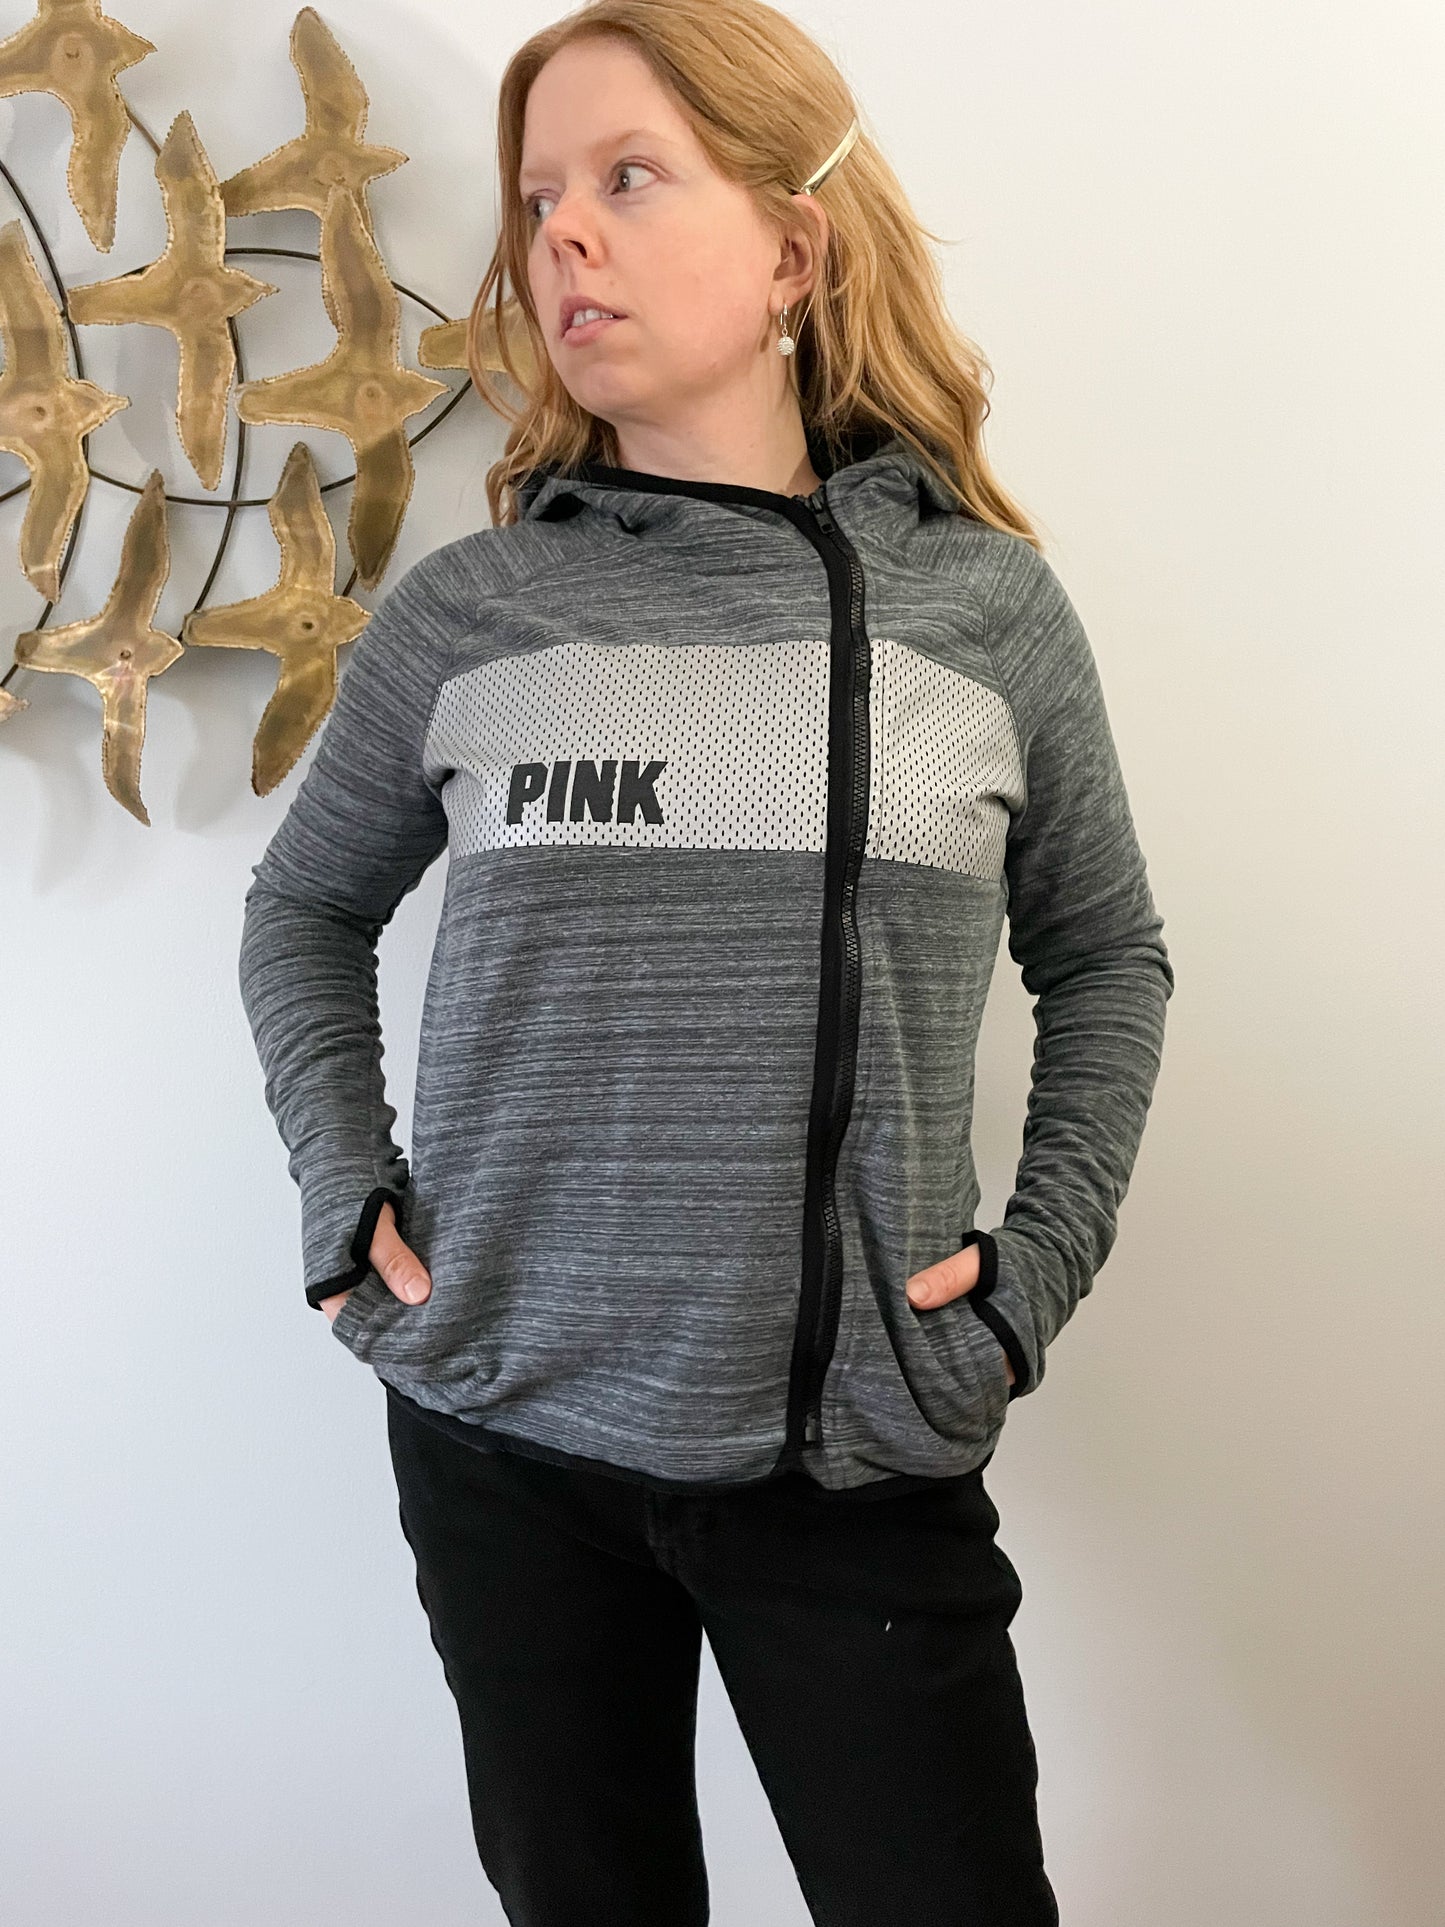 PINK Victoria's Secret Grey Asymmetrical Zipper Hoodie Sweater - S/M – Le  Prix Fashion & Consulting